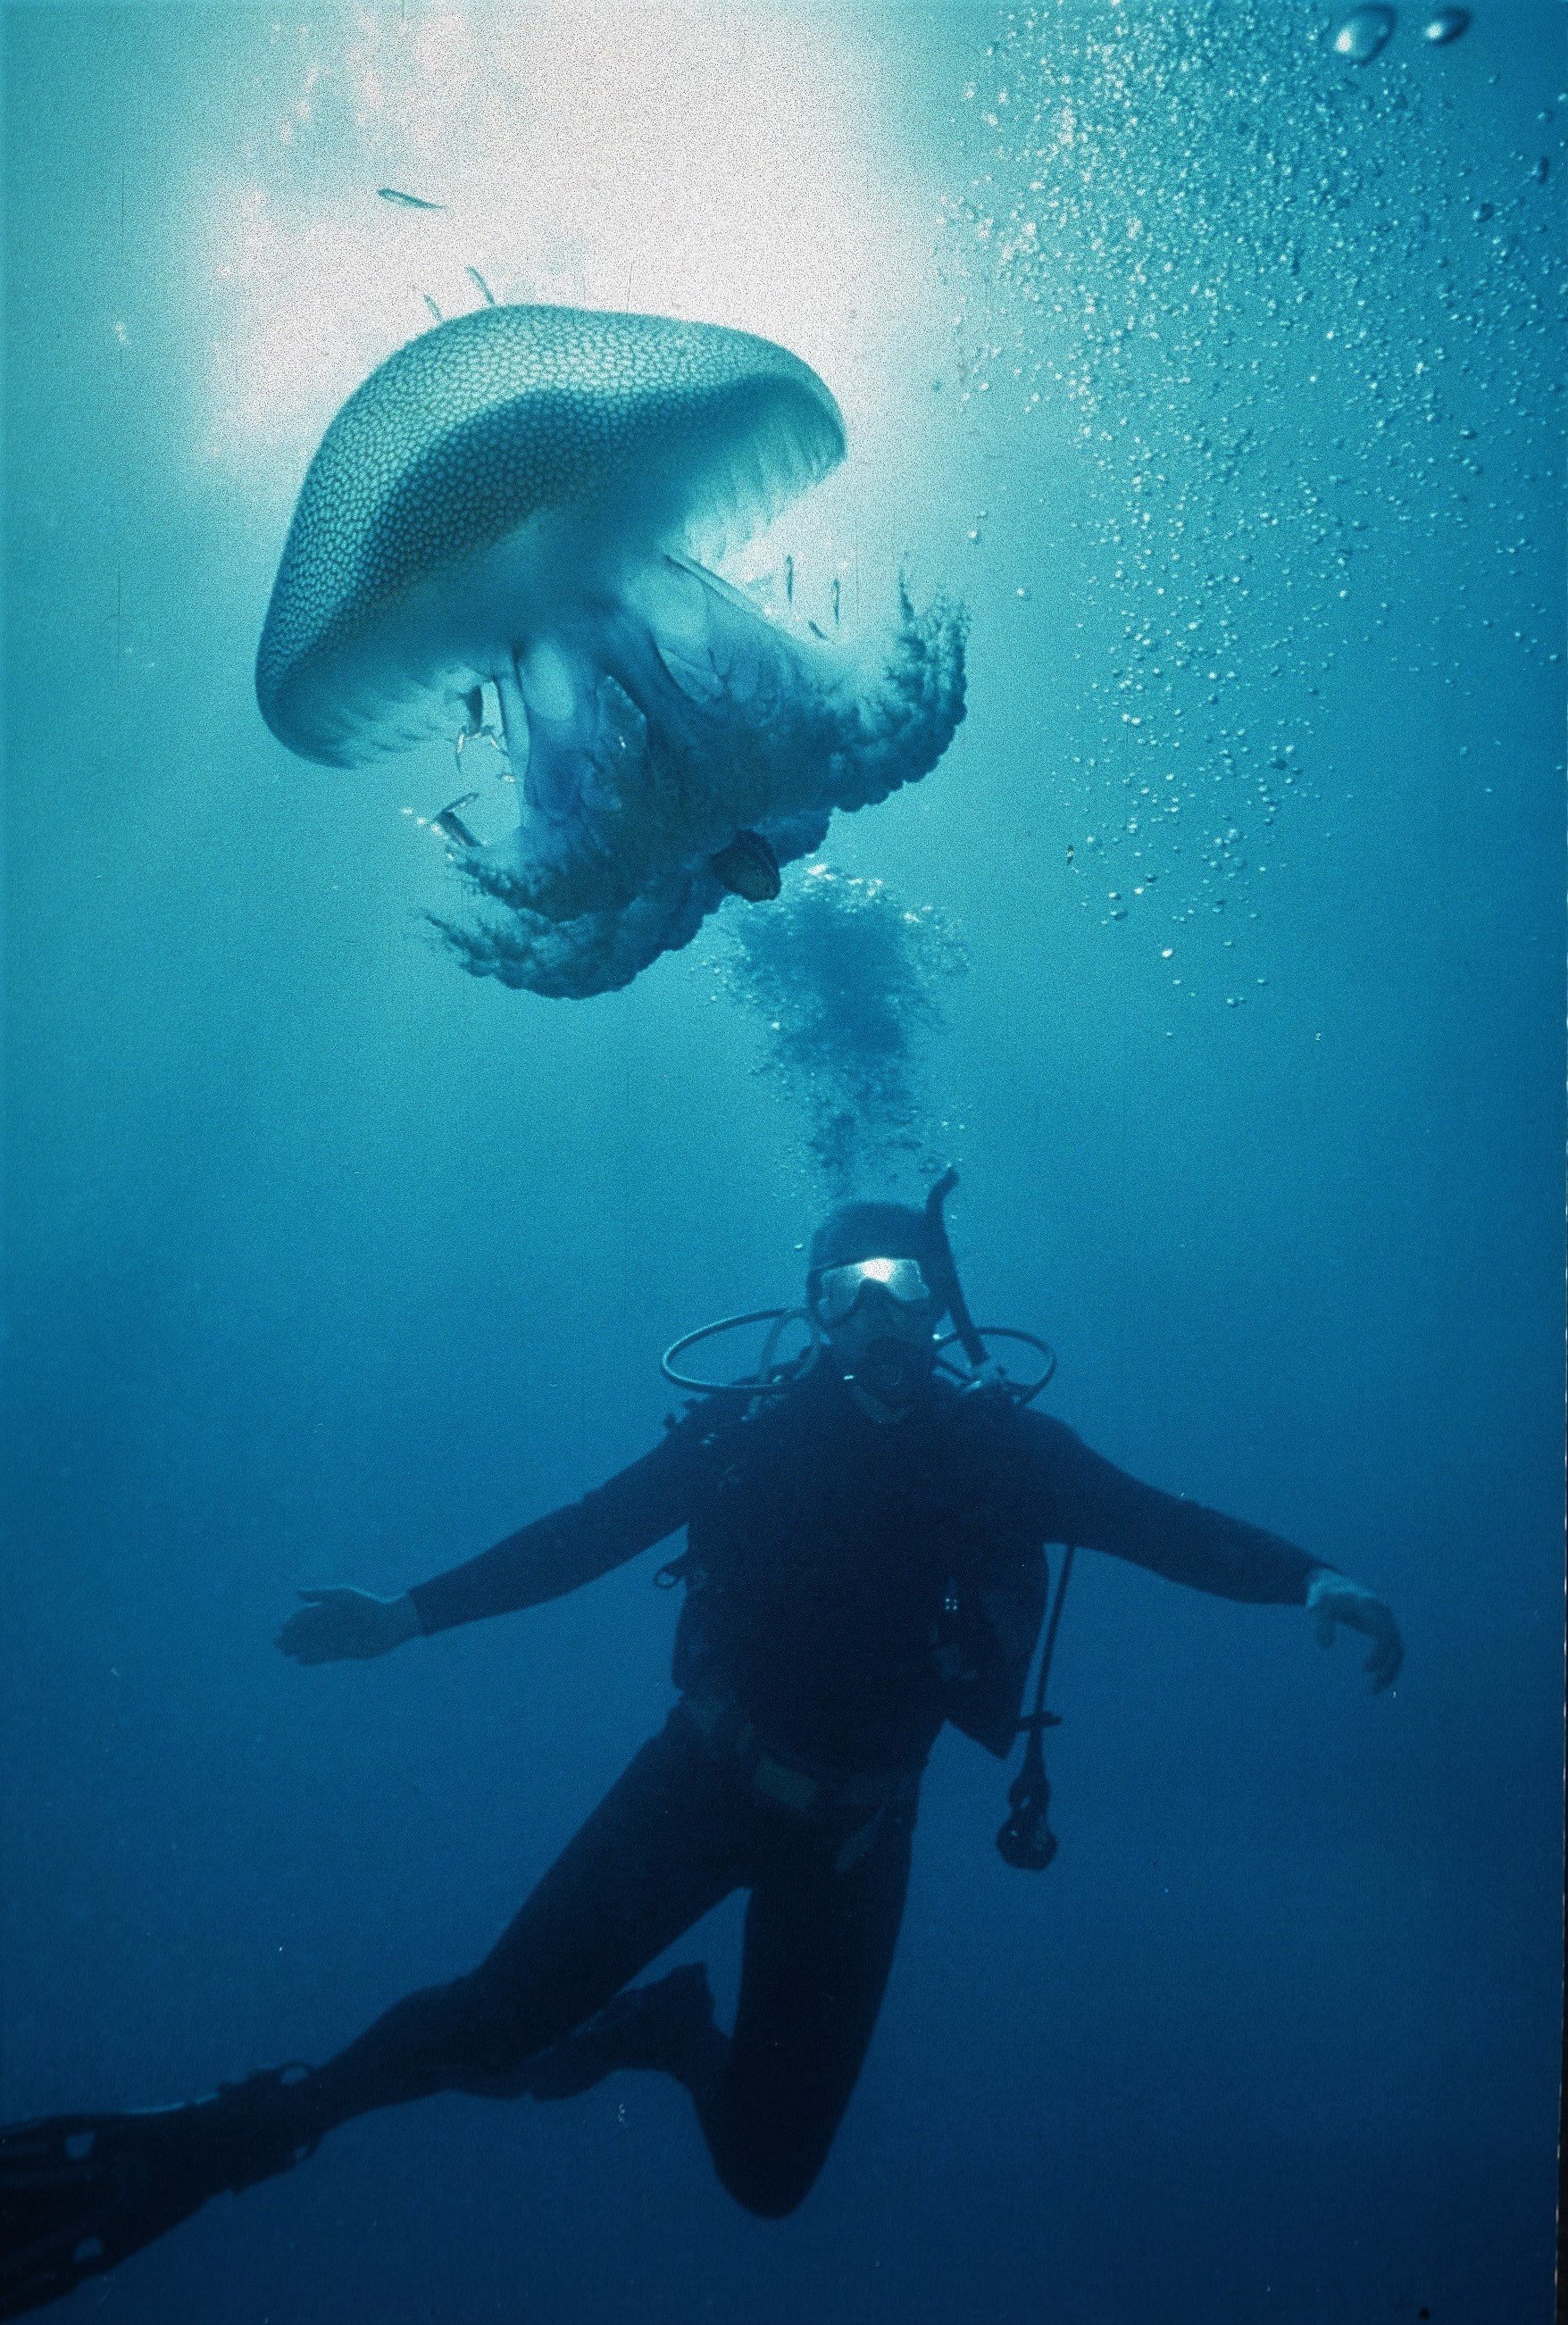 Huge Jellyfish floats by - Rottnest Island, Western Australia.